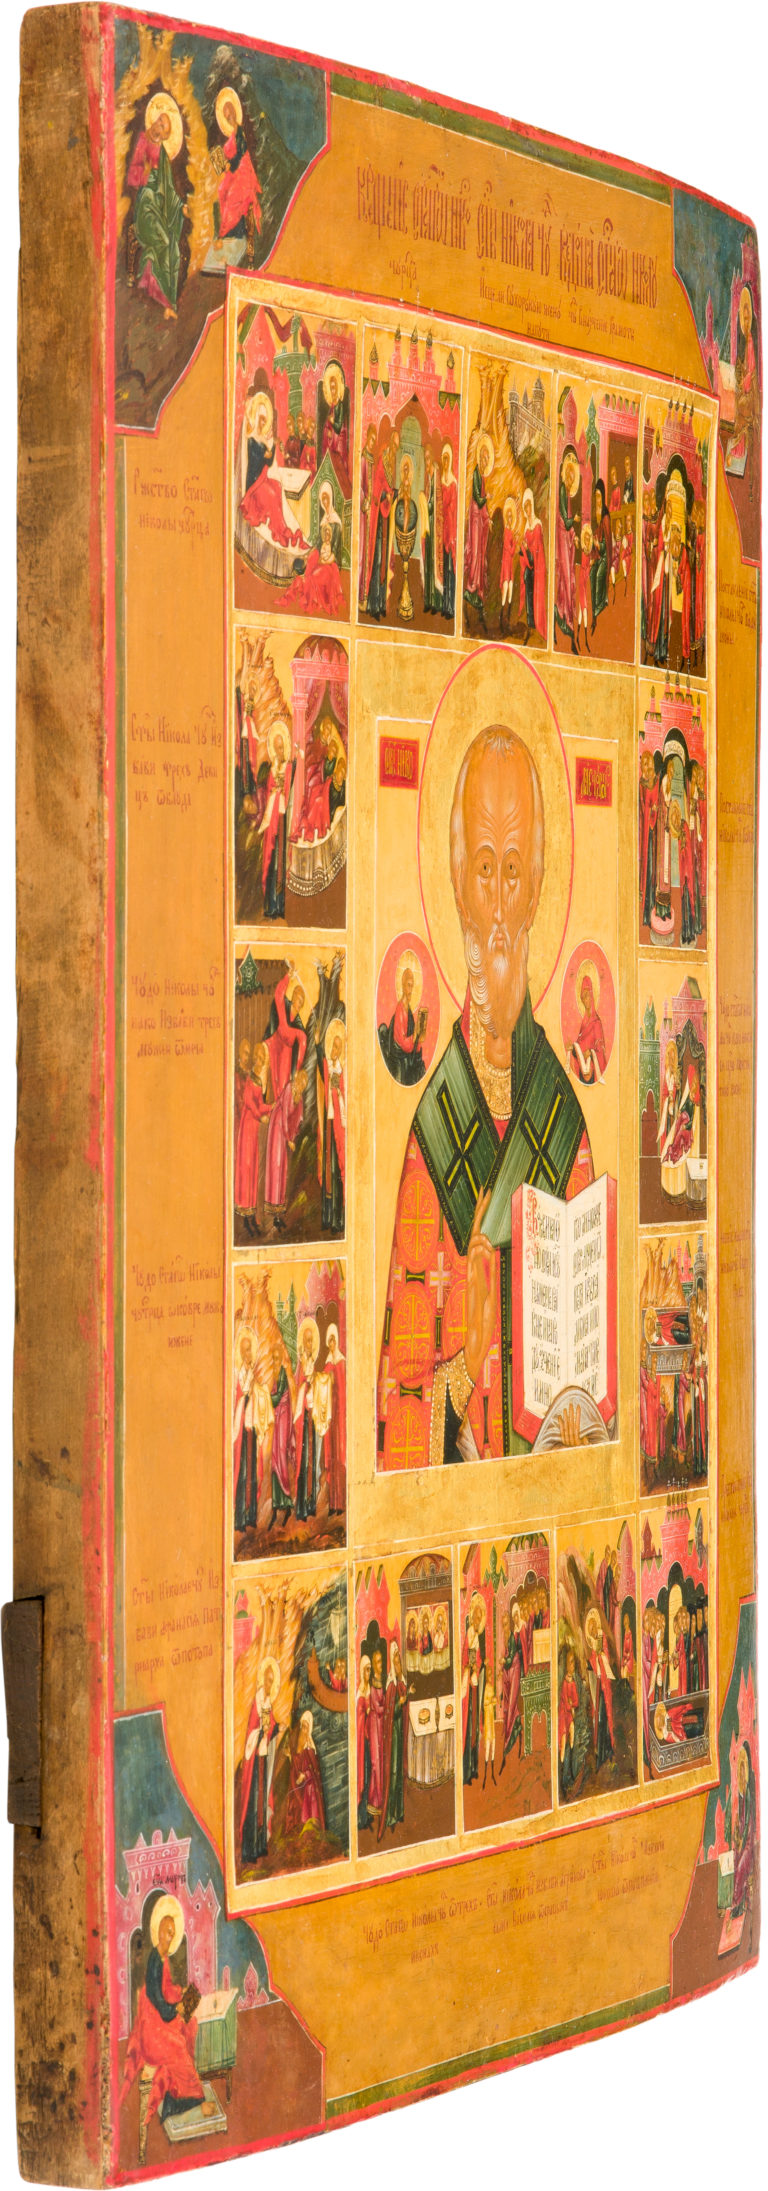 №23 Saint Nicholas – the Archbishop of Myra, with 16 hagiographical border scenes